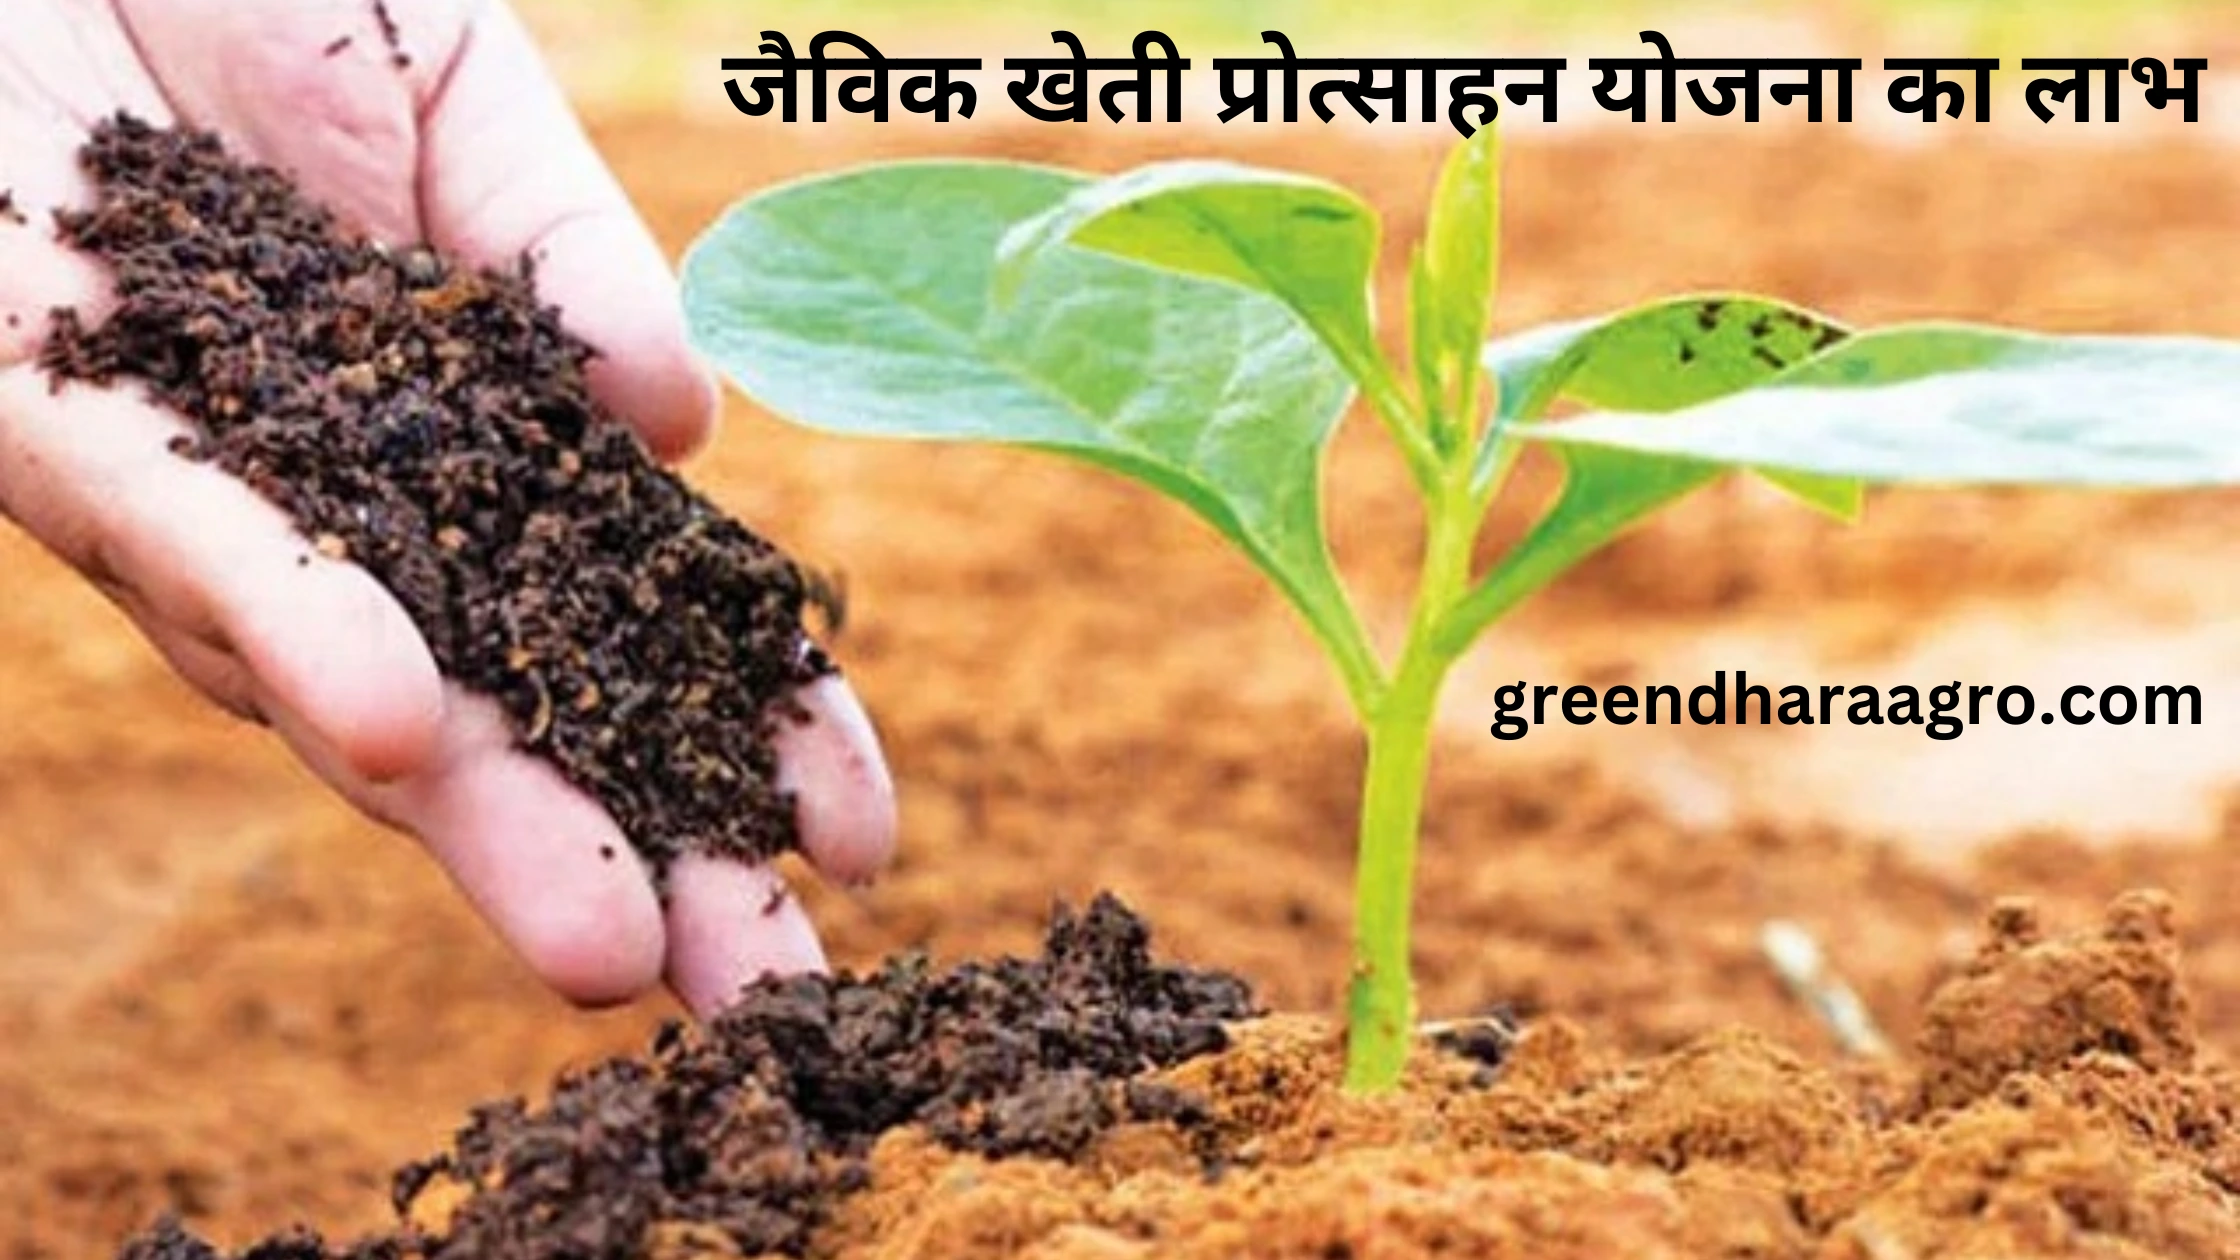 जैविक खेती प्रोत्साहन योजना | Organic Farming Scheme Explained in Hindi